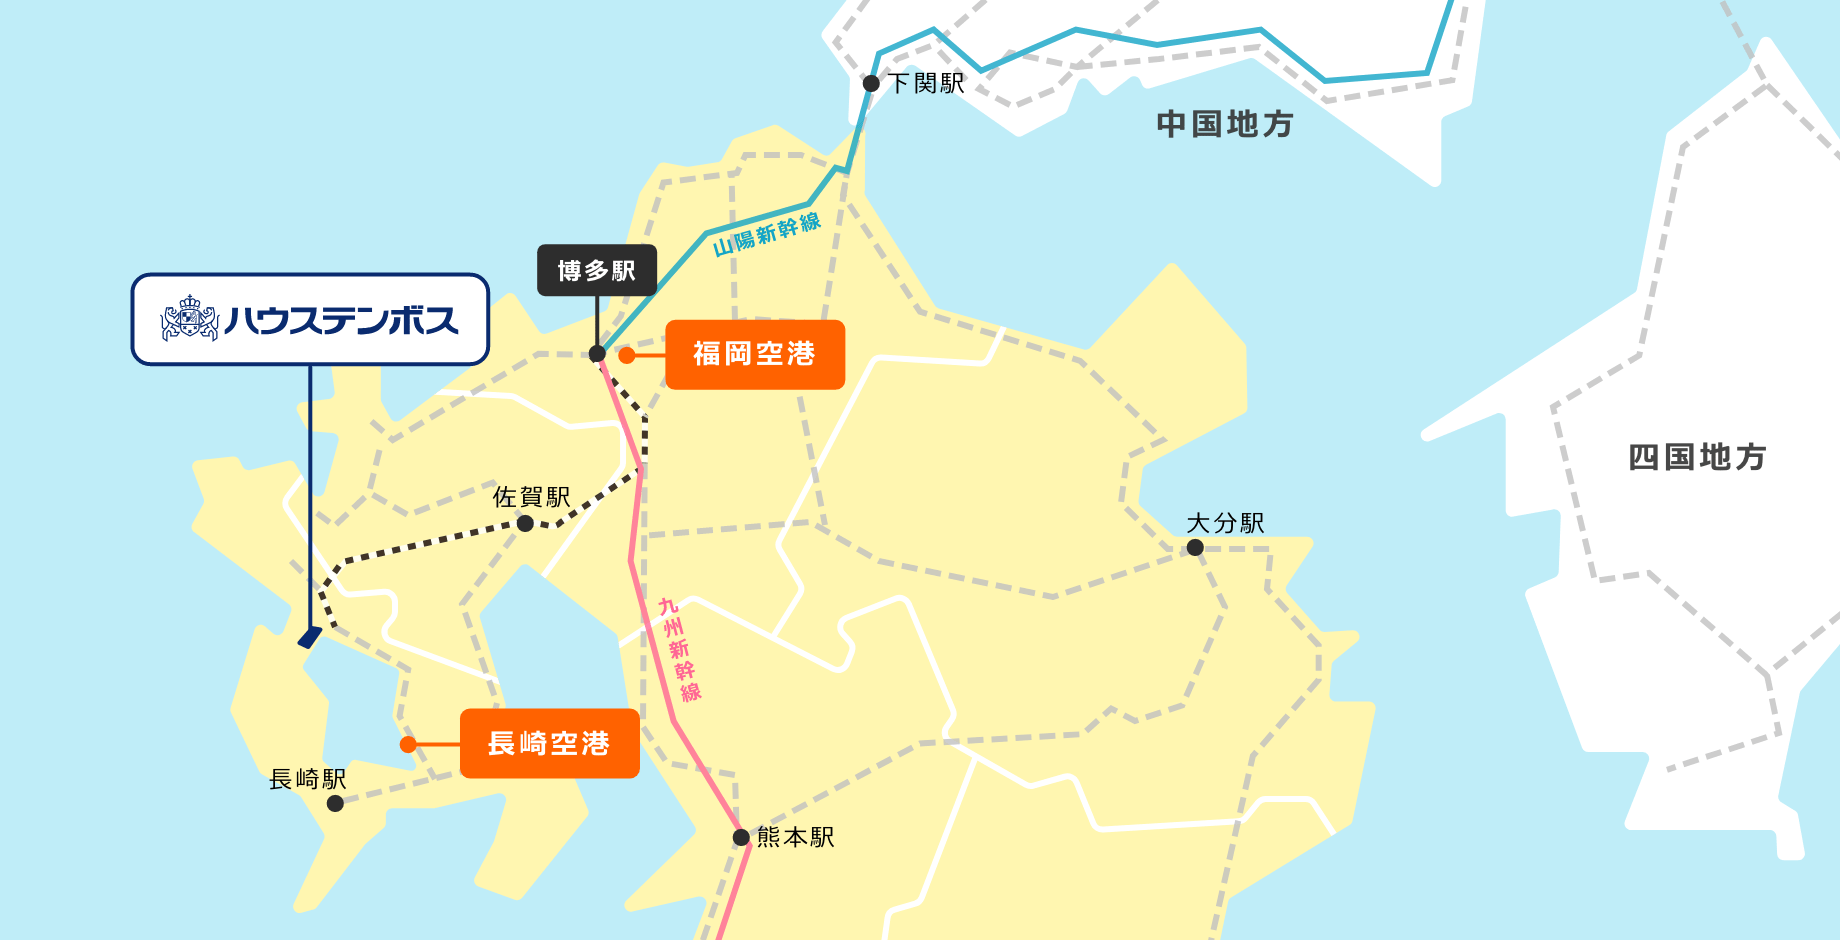 Wide area map from Kyushu region to Huis Ten Bosch